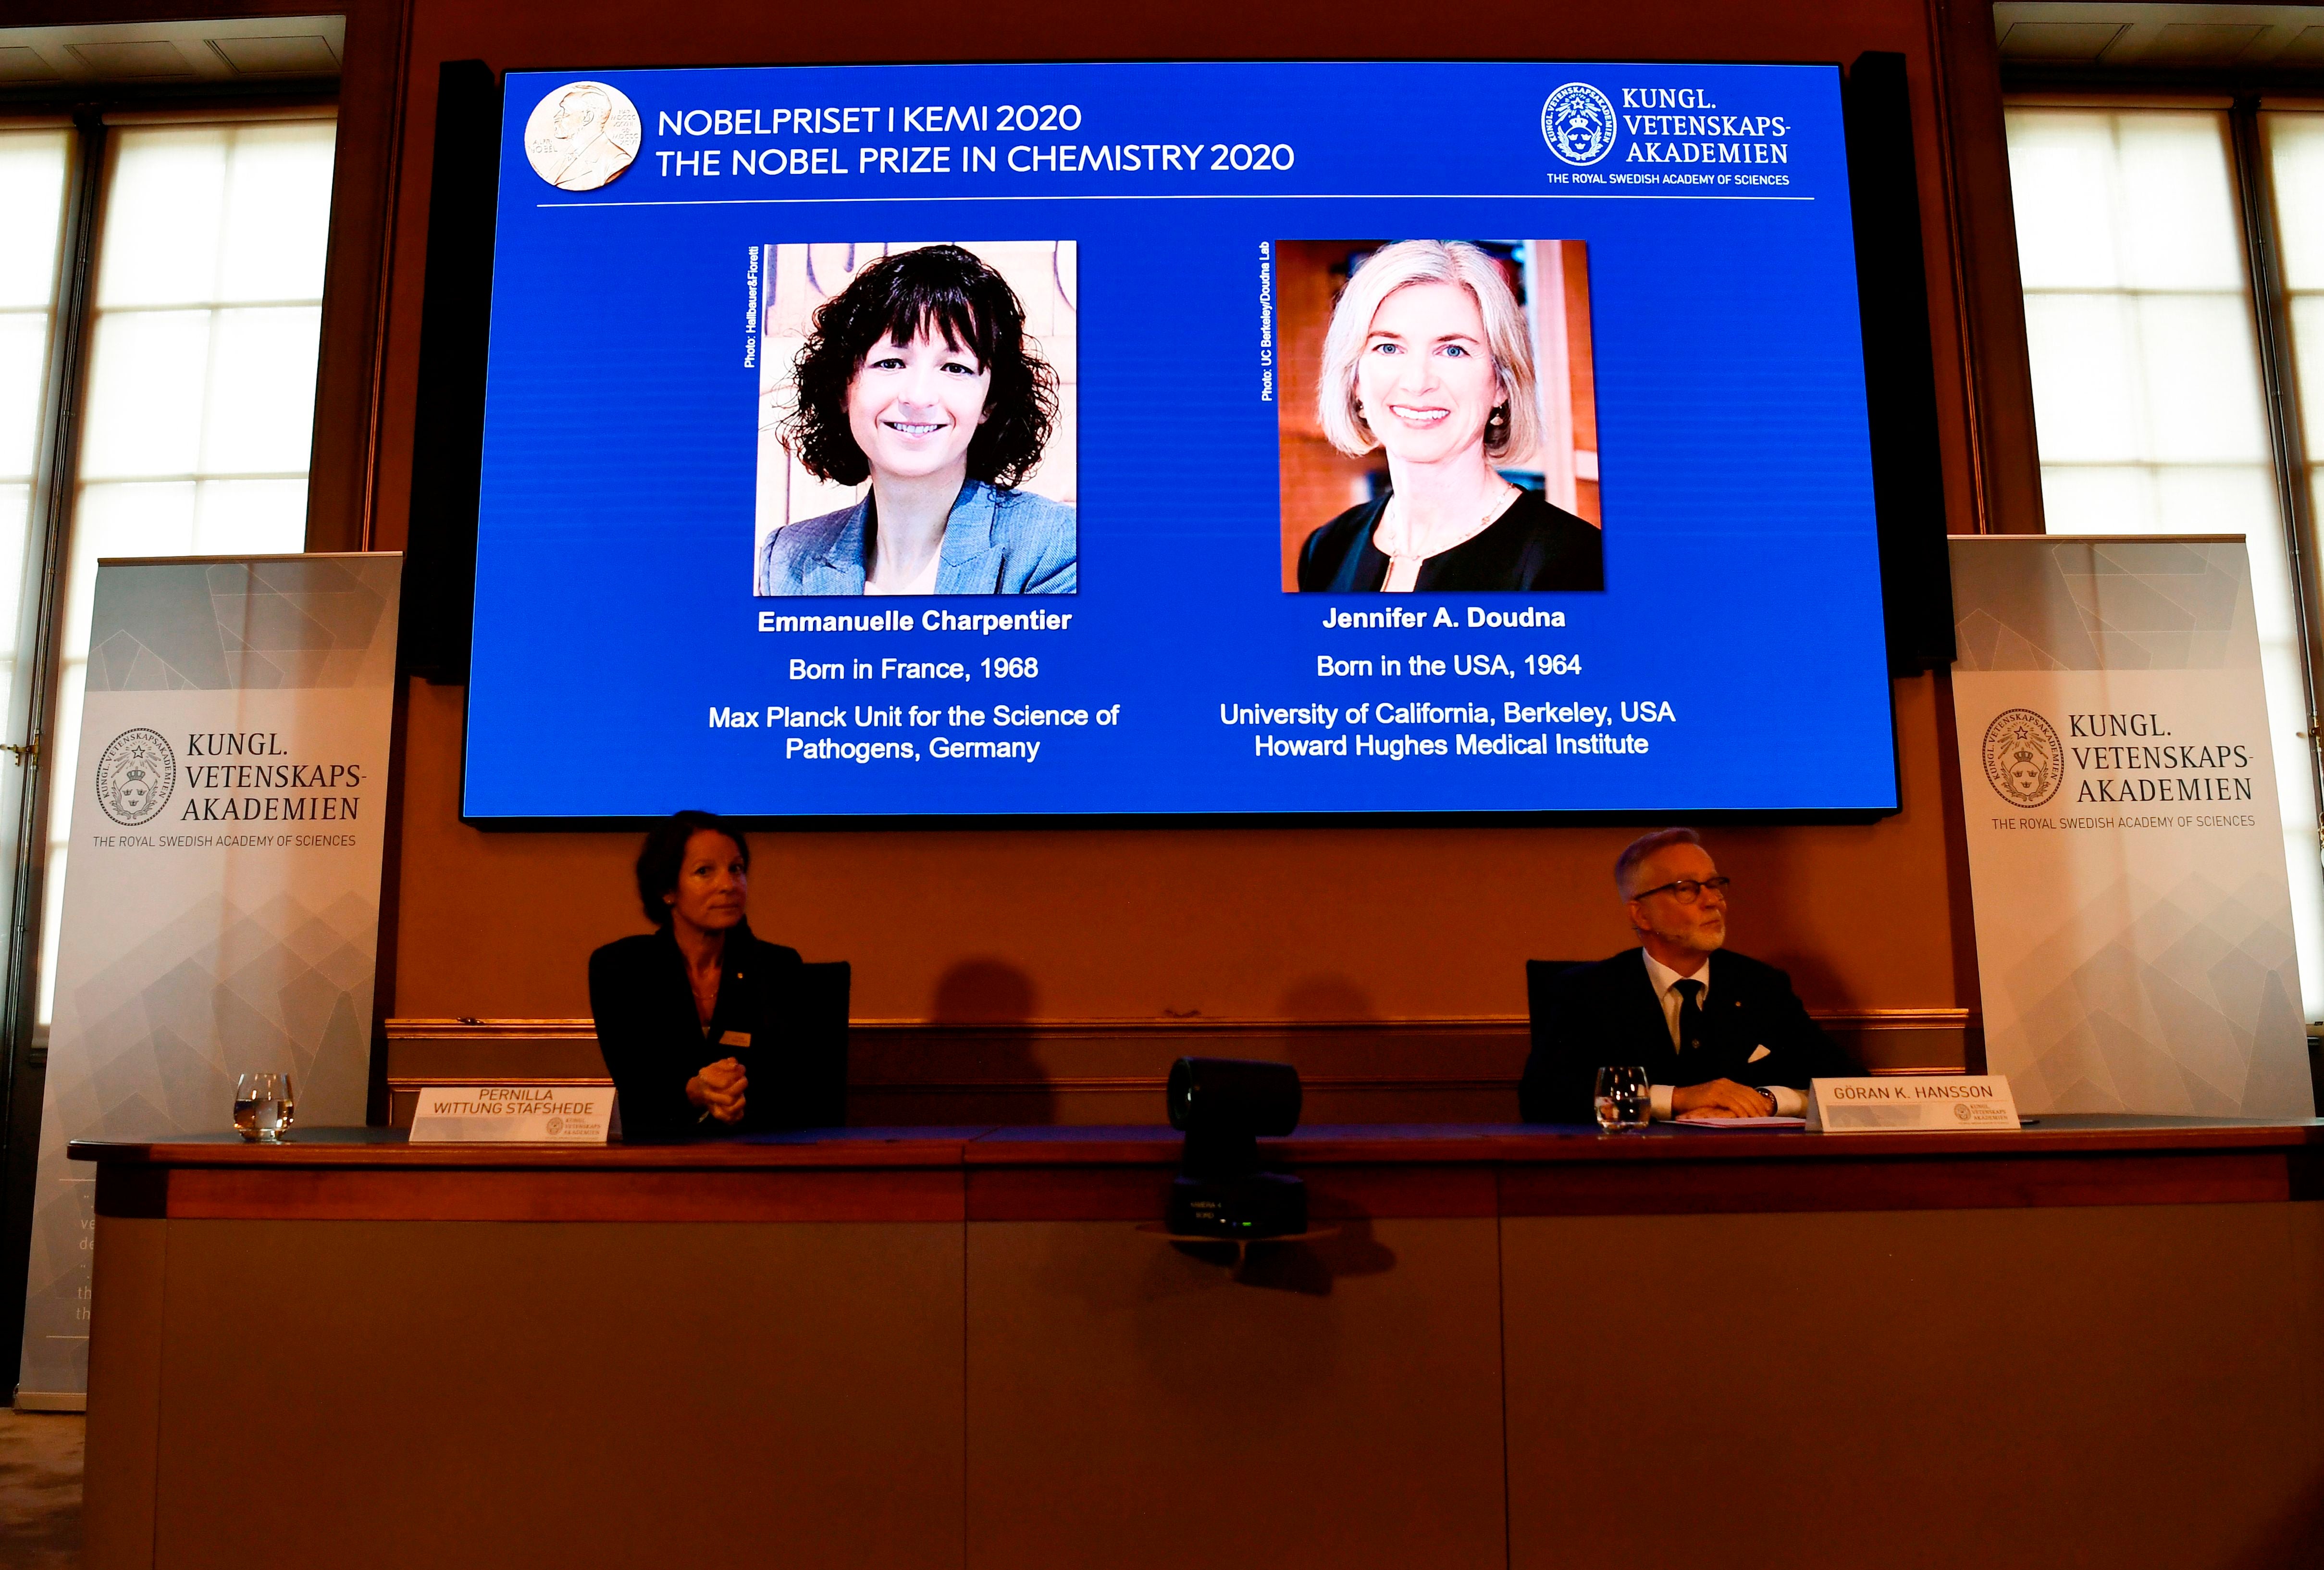 Emmanuelle Charpentier y Jennifer A. Doudna fueron reconocidas